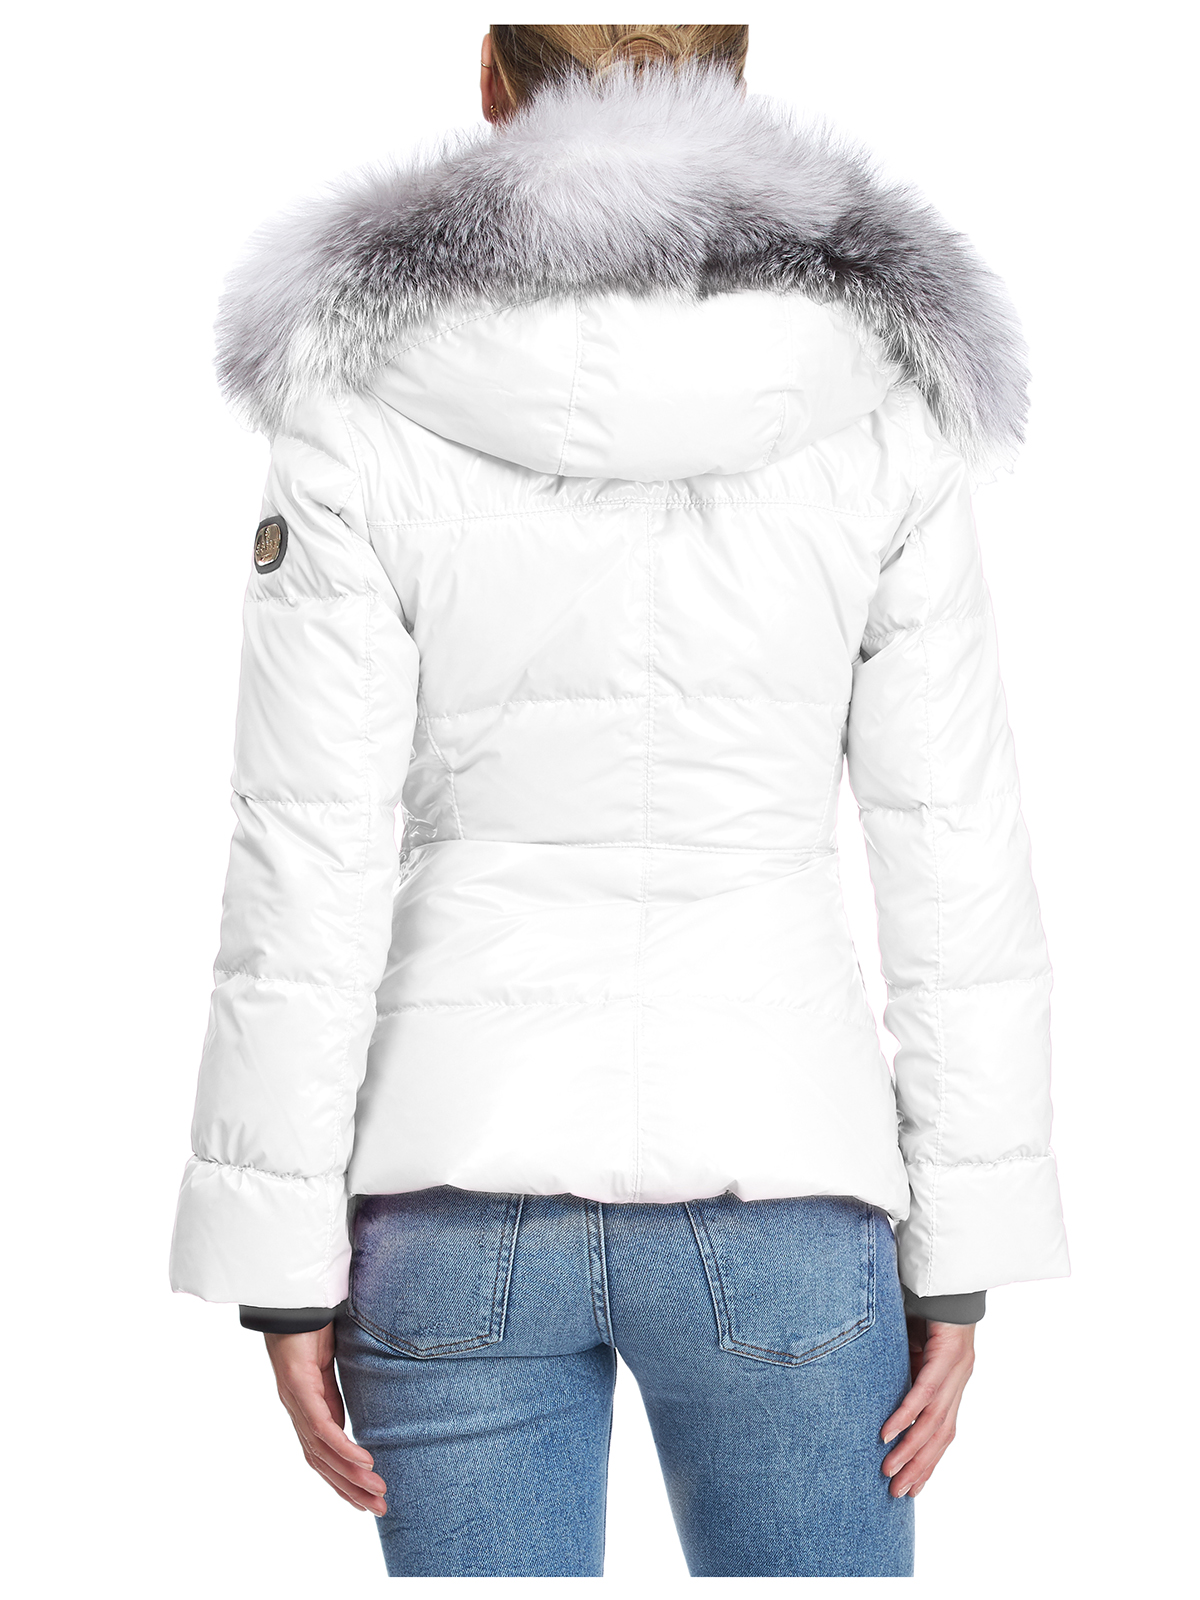 Gorski Woman's White Apres-Ski Shiny Technical Fabric with Detachable ...